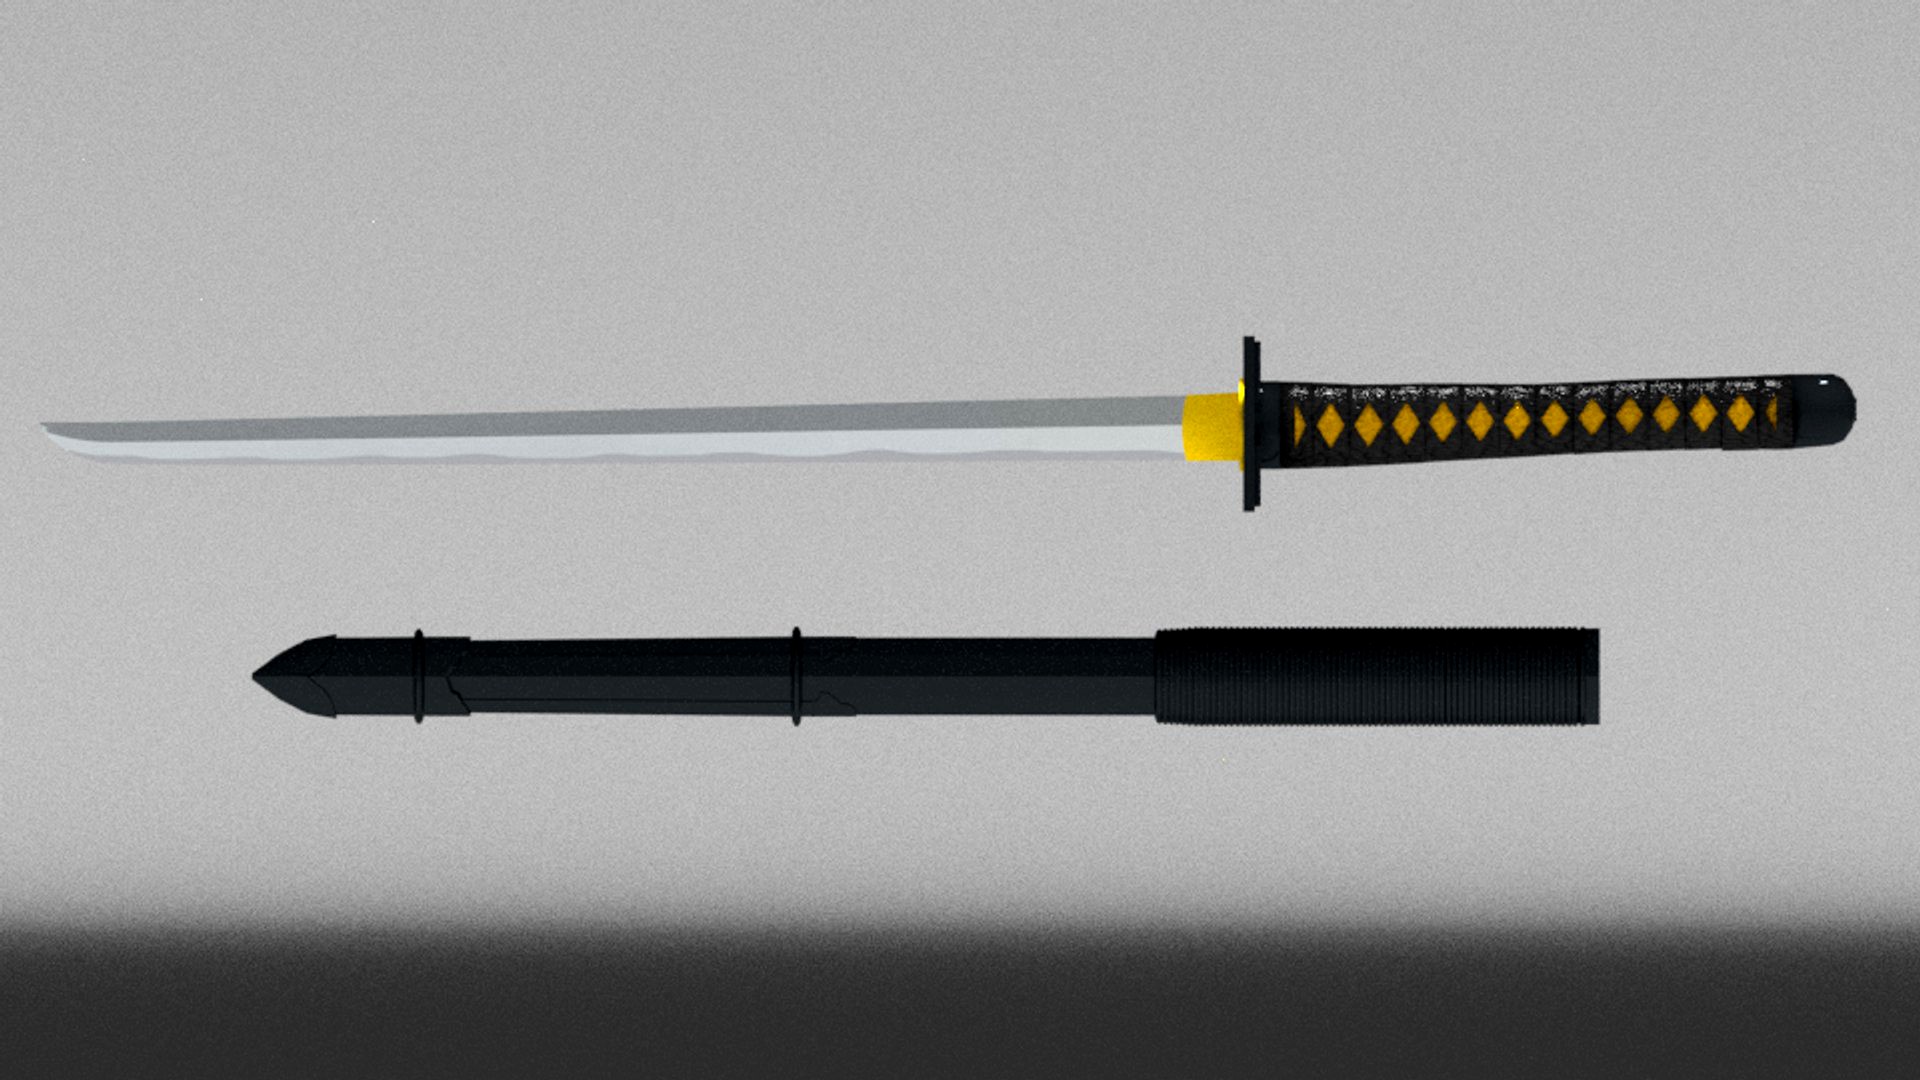 Ninjato Sword with Sheath